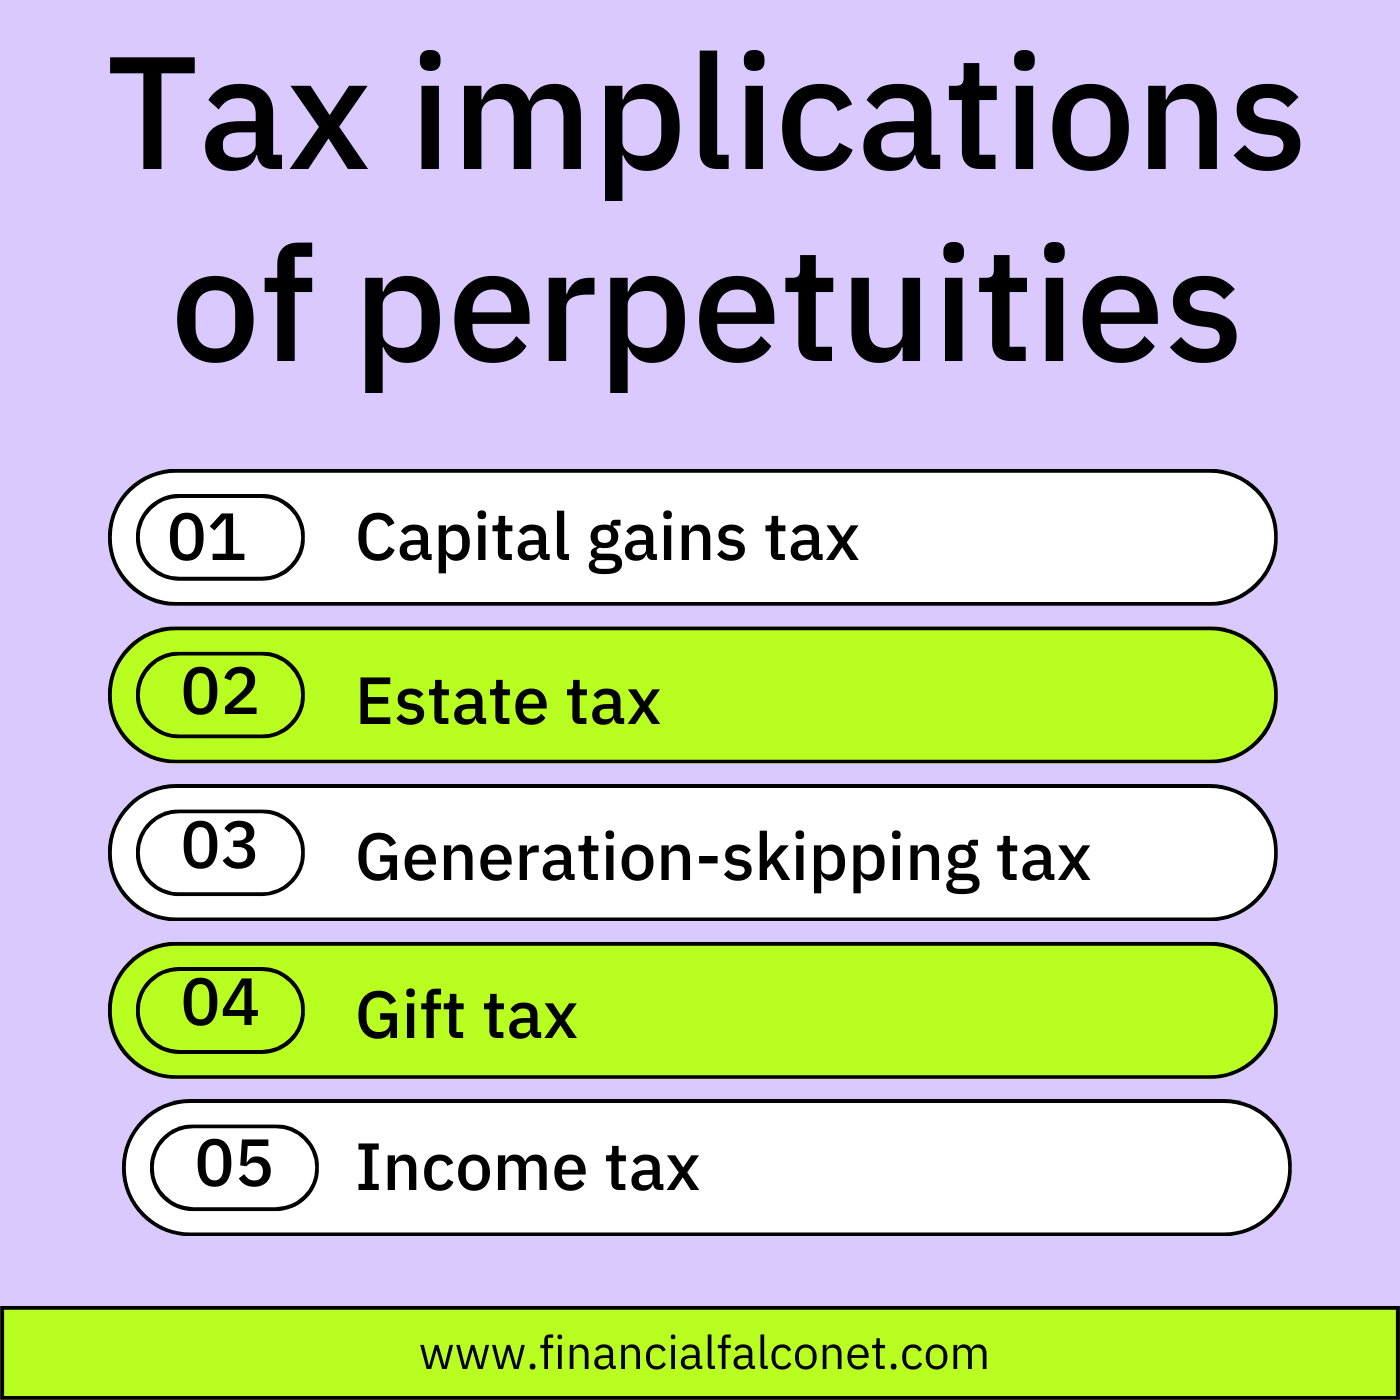 Tax implications of perpetuities